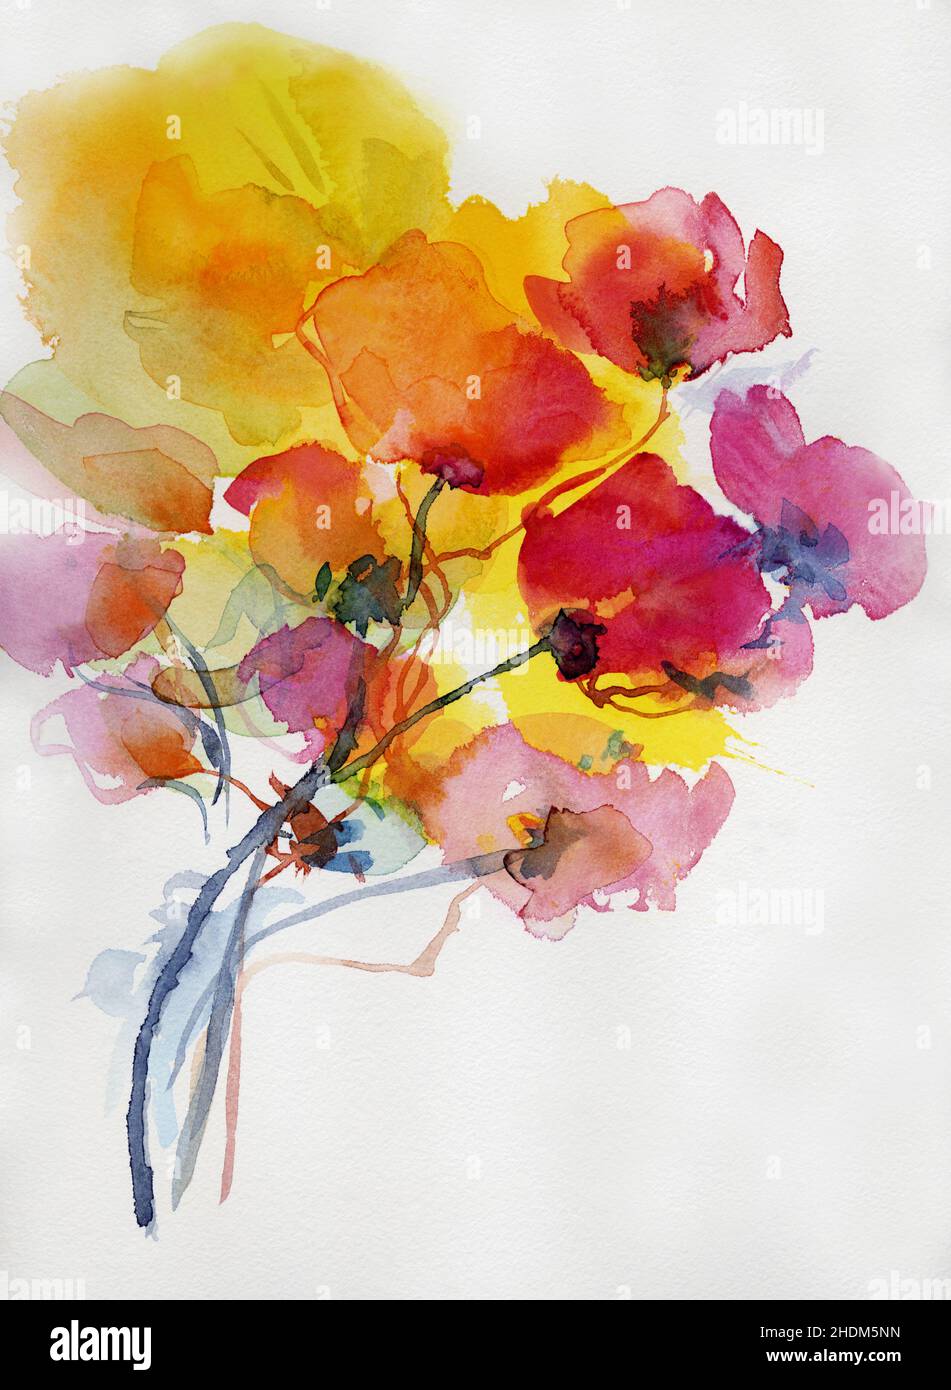 flowers, art, watercolor painting, flower, flower valentain, arts Stock Photo